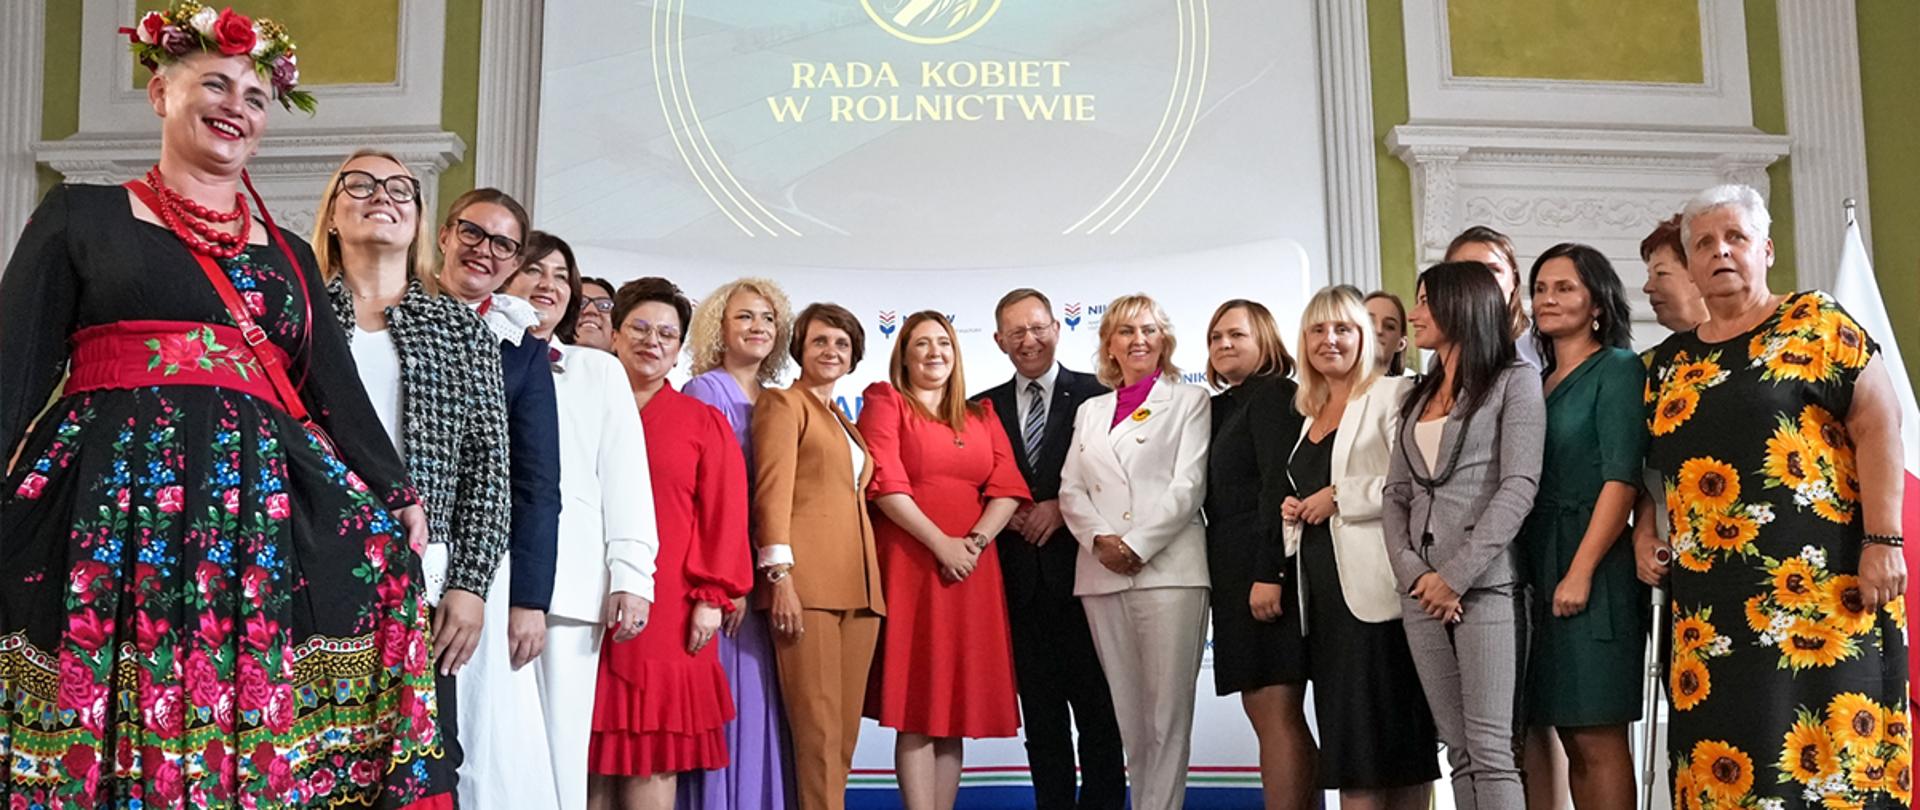 MRiRW/gov.pl Rada Kobiet